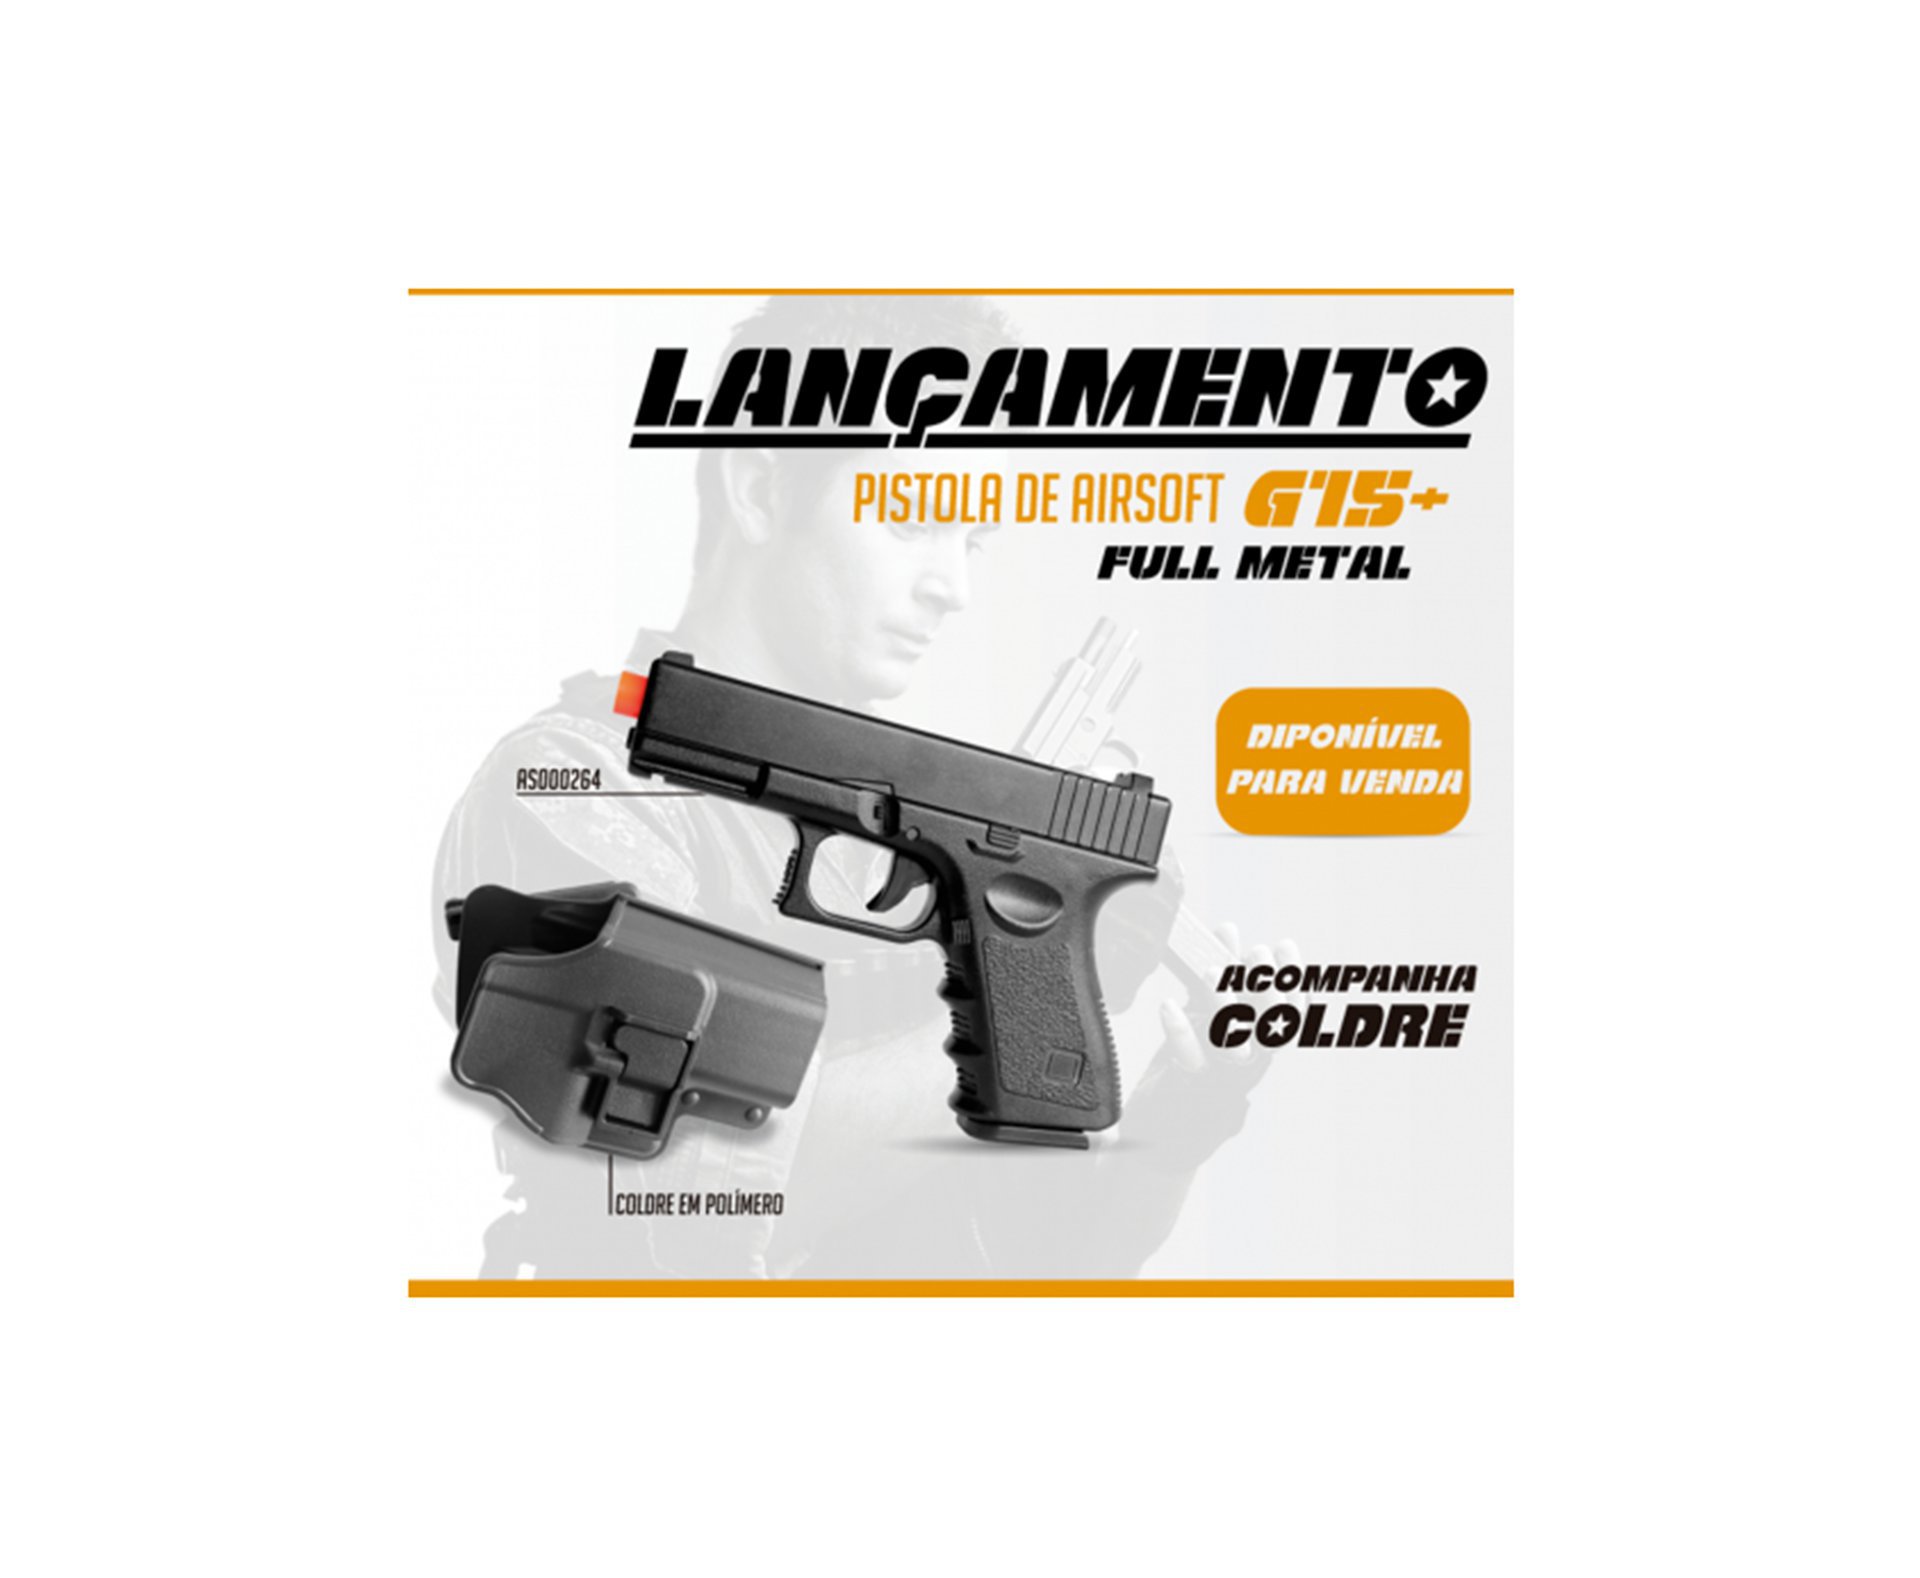 Pistola De Airsoft Glock Full Metal + Coldre Polimero - G.15+ Cal 6mm - Galaxy